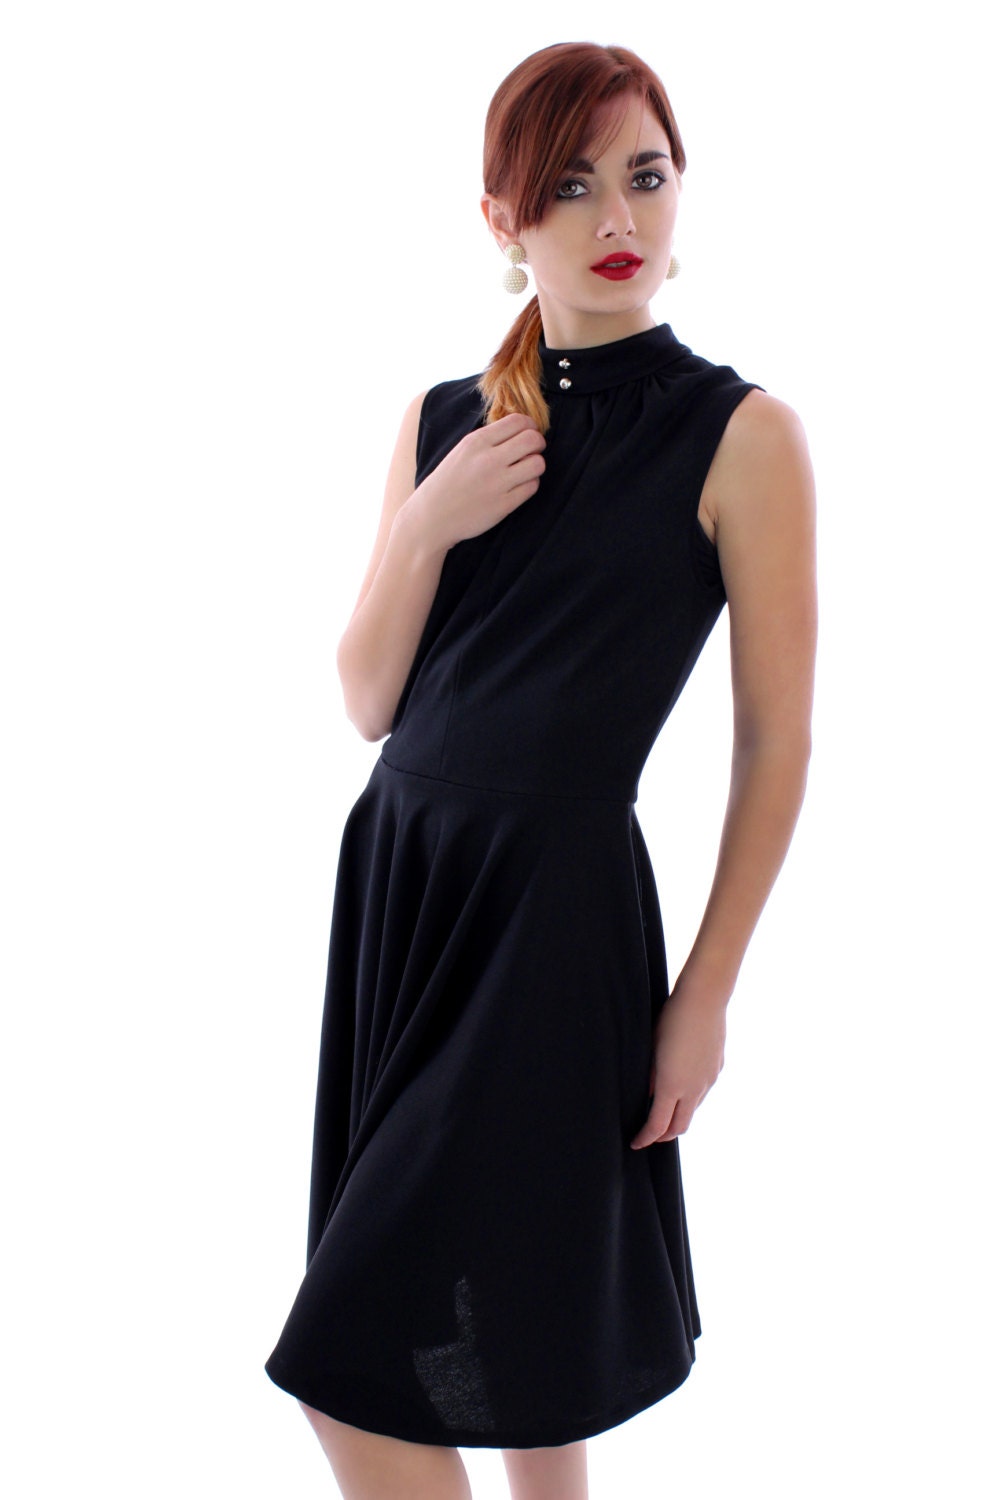 70s Mod Dress Black Circle Skirt A-line 60s Classic Silver | Etsy